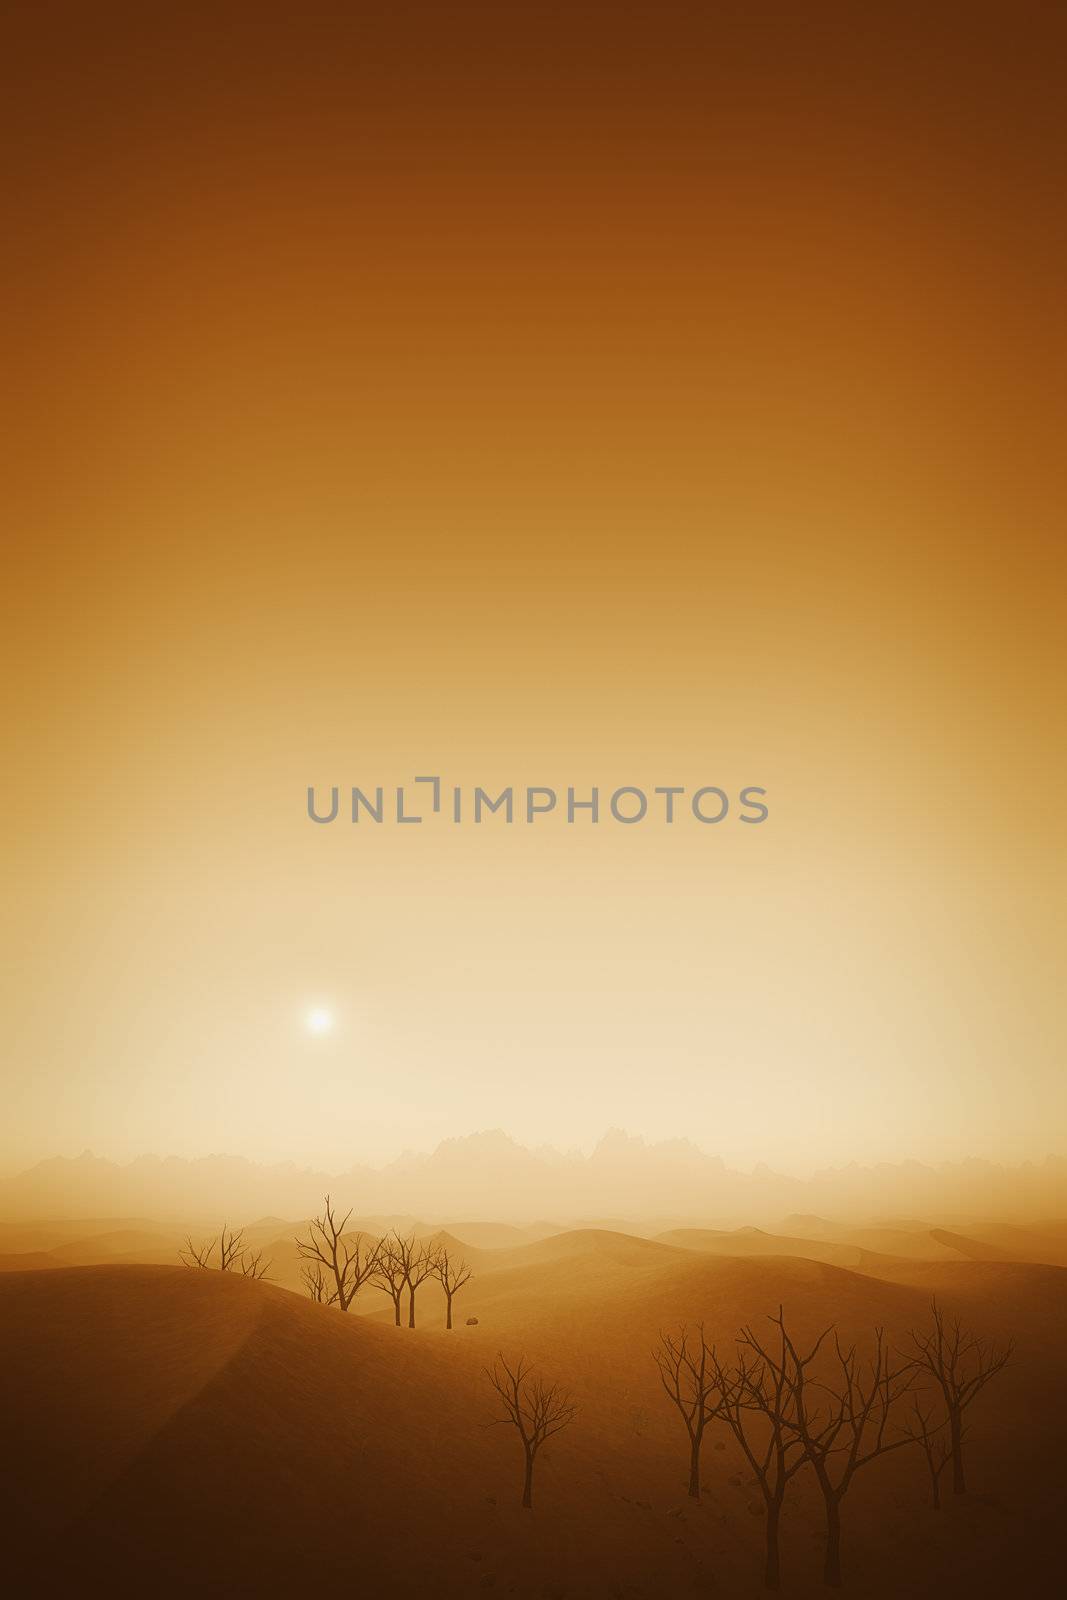 An image of a nice desert landscape